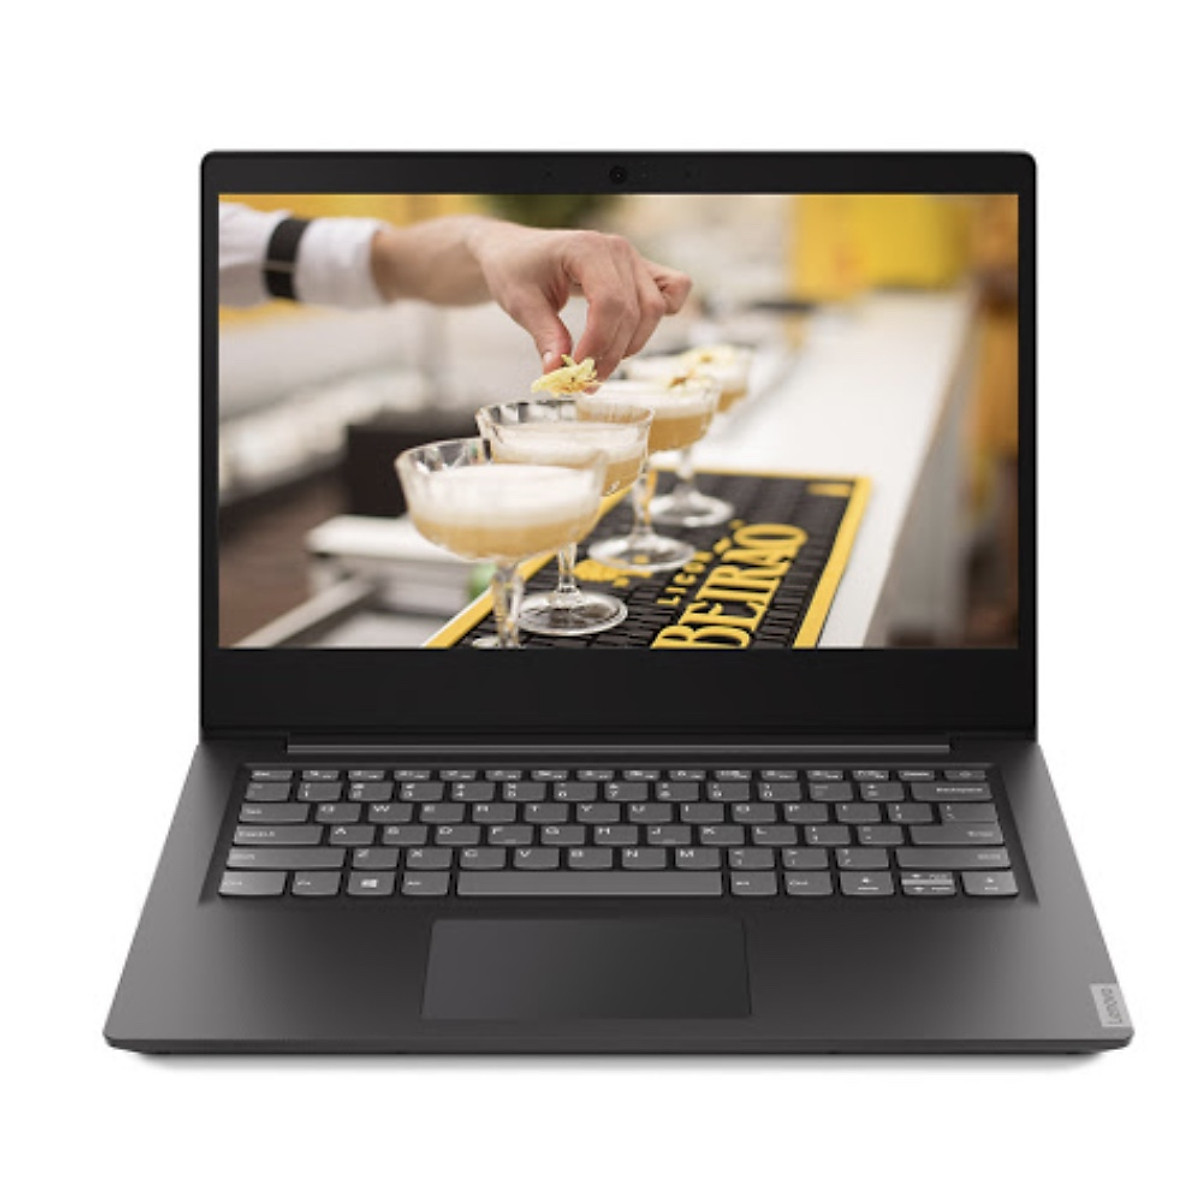 Mới 100% Full Box] Laptop Lenovo IdeaPad 3 14ARE05 81W30059VN - AMD Ryzen 5